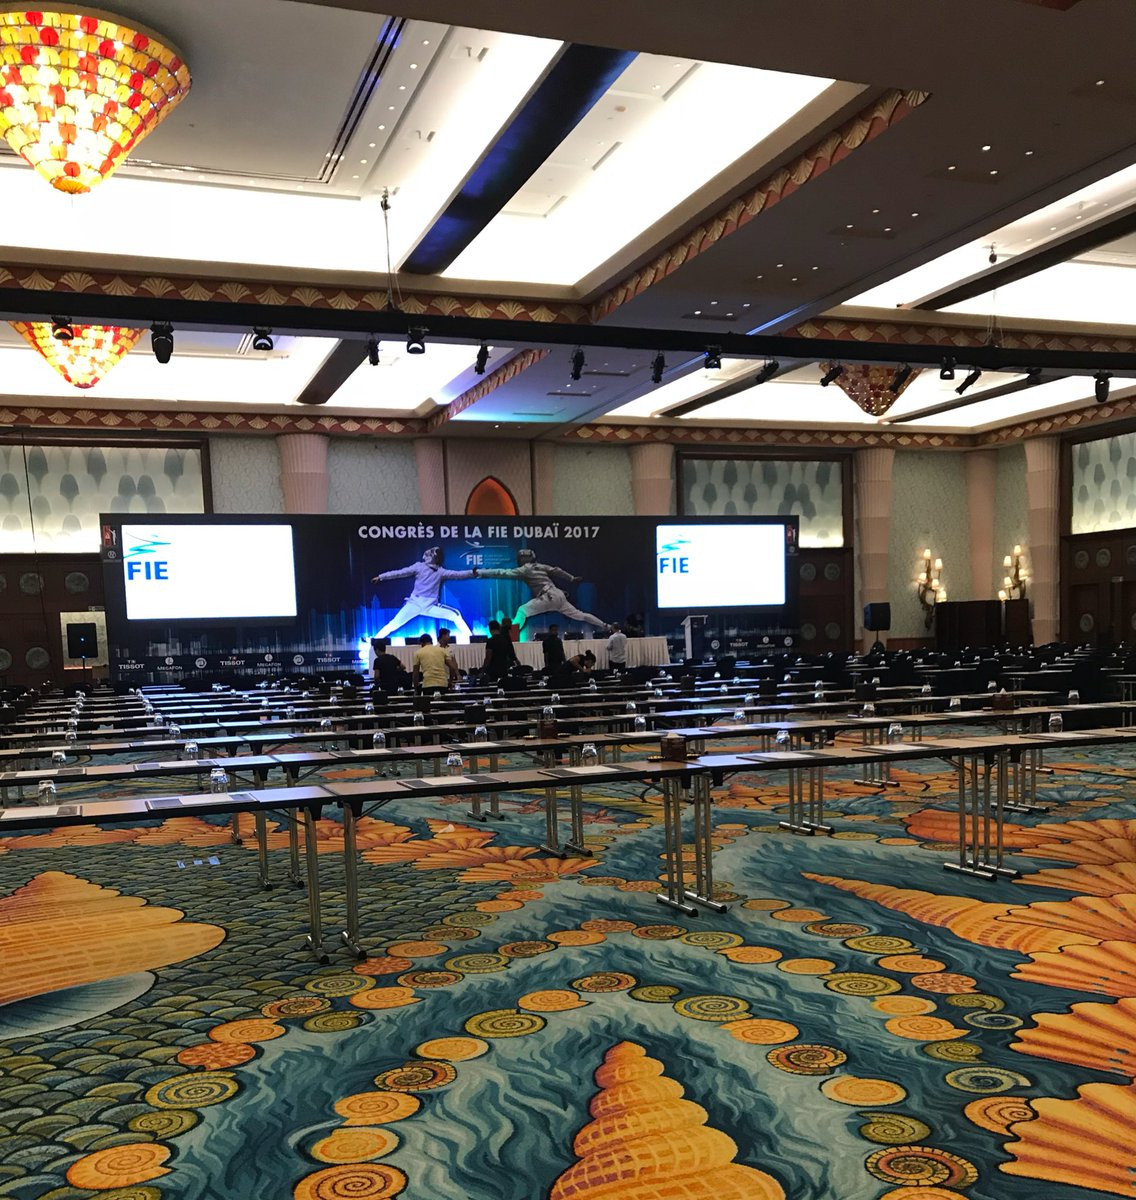 Tokyo 2020 and awarding of World Championships headline agenda at FIE Congress in Dubai